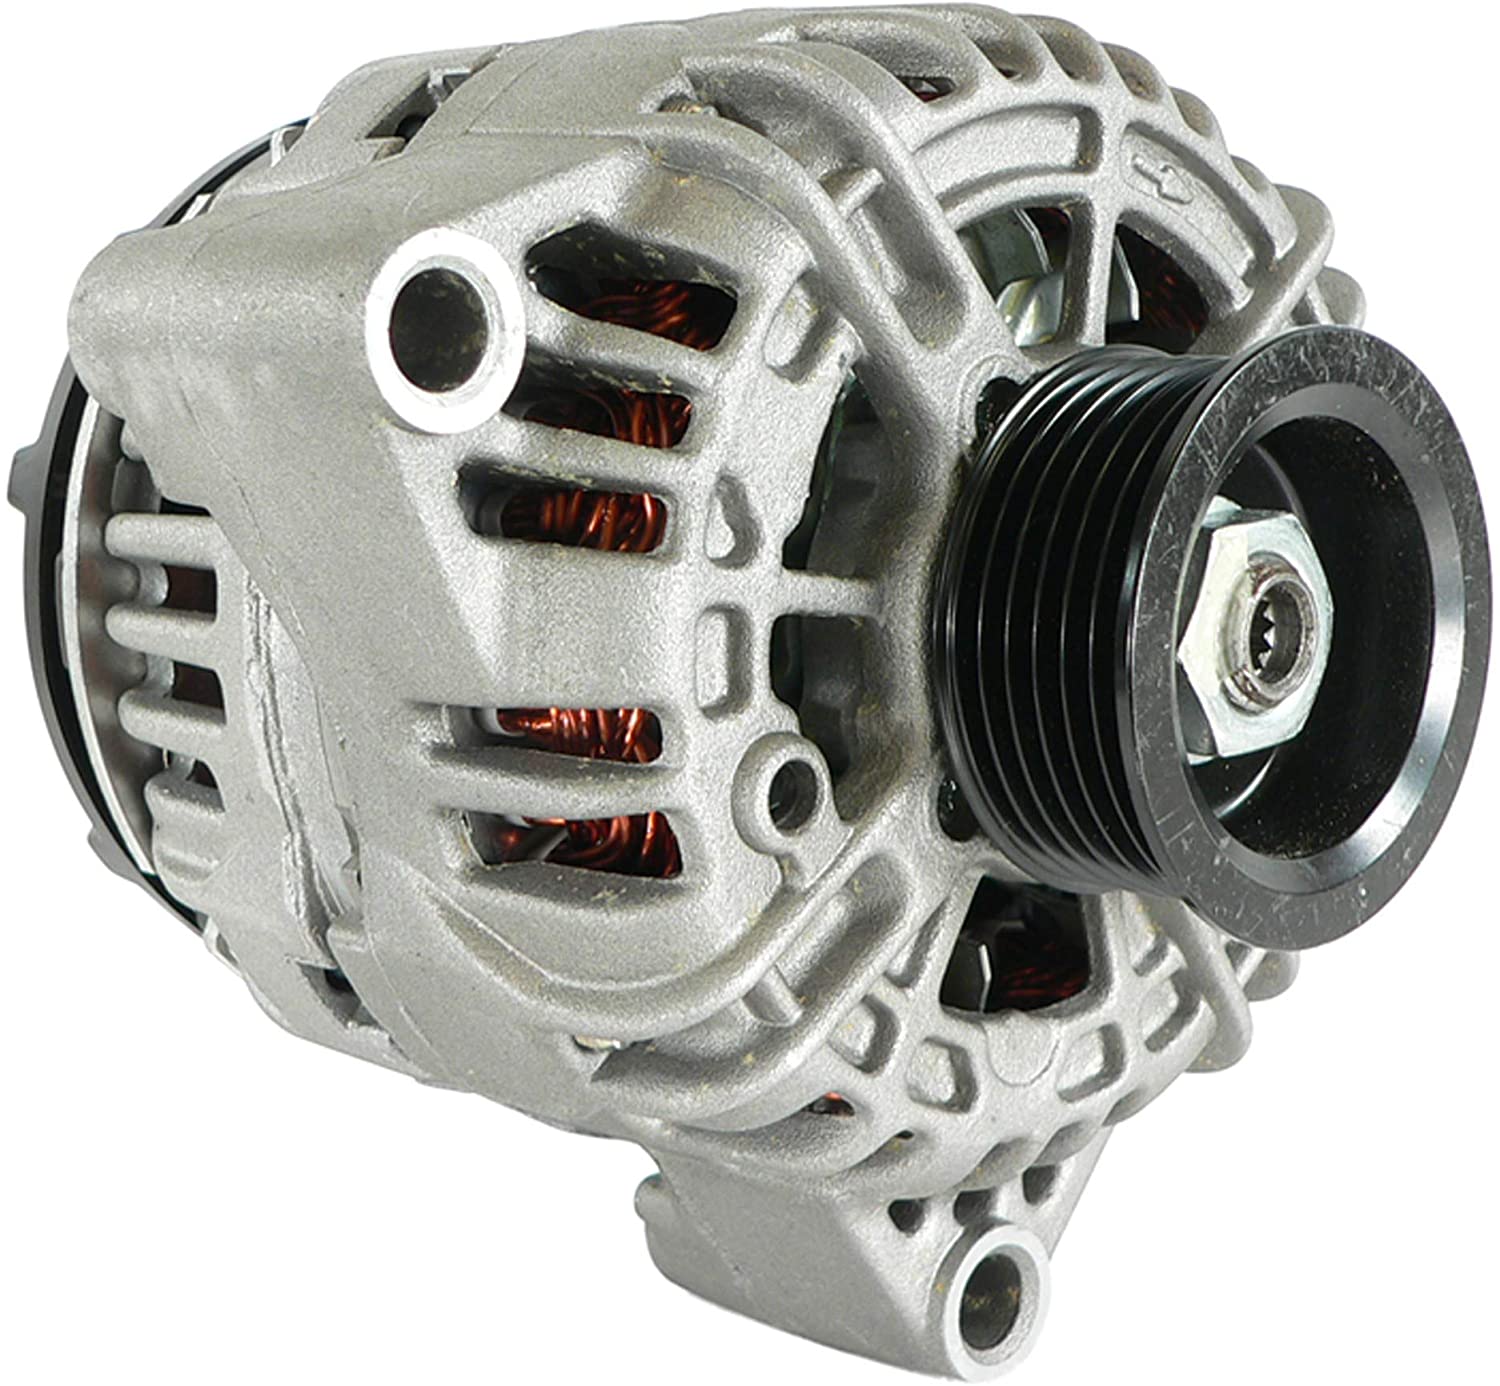 DB Electrical ABO0425 Alternator Compatible With/Replacement For Chevrolet GMC Truck SaVana Vans 4.3L 4.8L 5.3L 6.0L 6.6L Yukon XL 8.1L 2005 2006 2007 11349 94665137 0-124-325-164